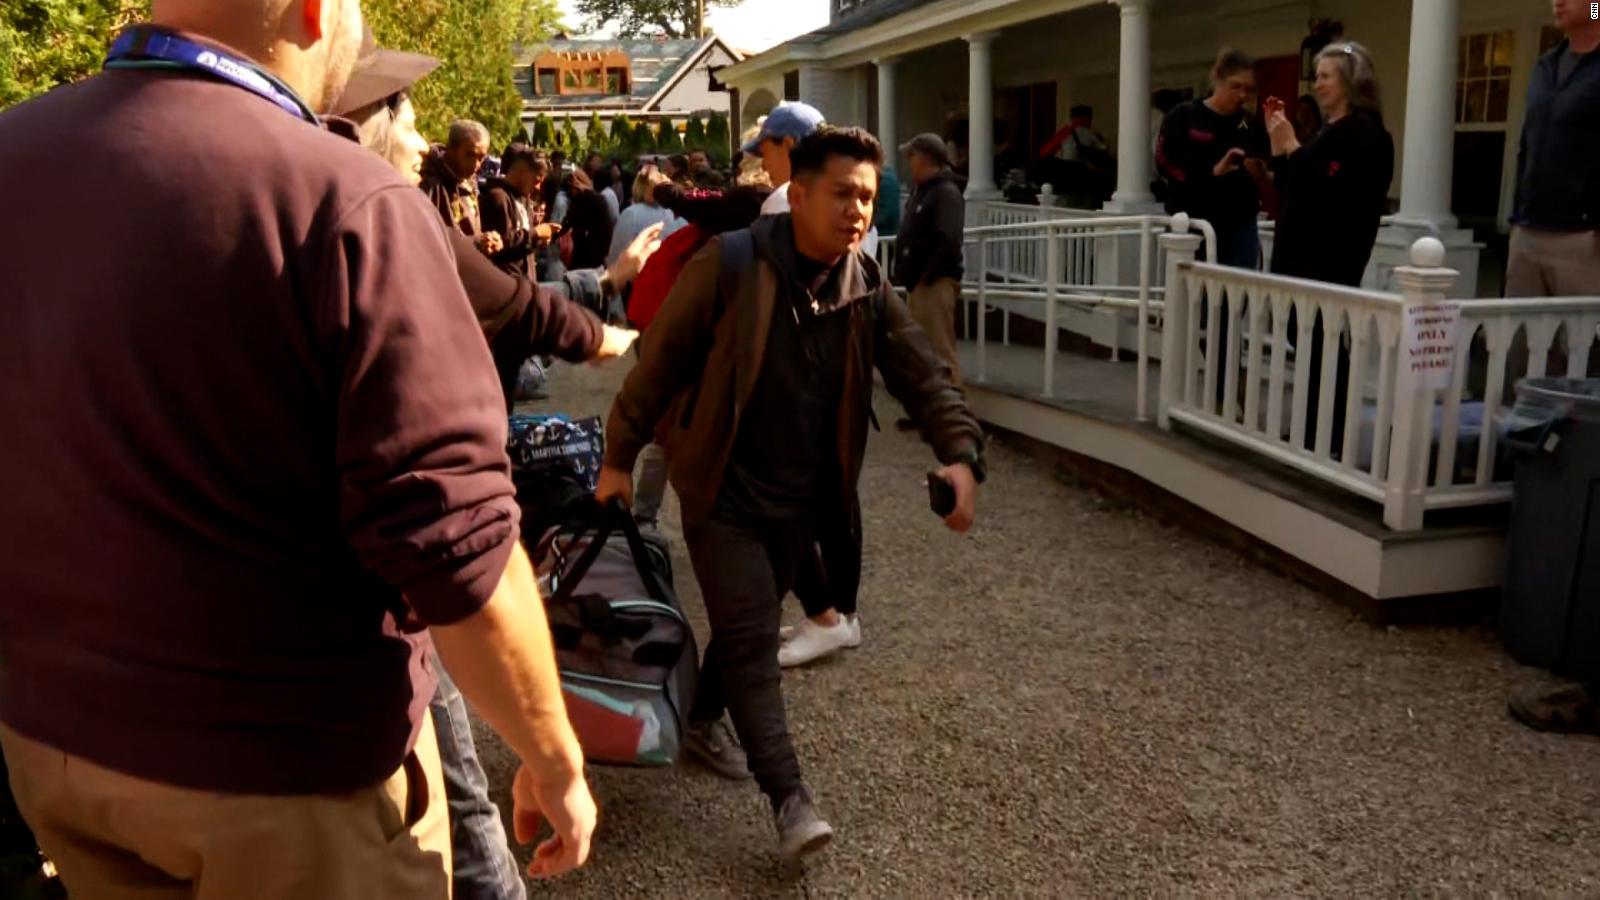 El grupo de inmigrantes enviados a Martha's Vineyard recibe asistencia humanitaria en Cape Cod, Massachusetts